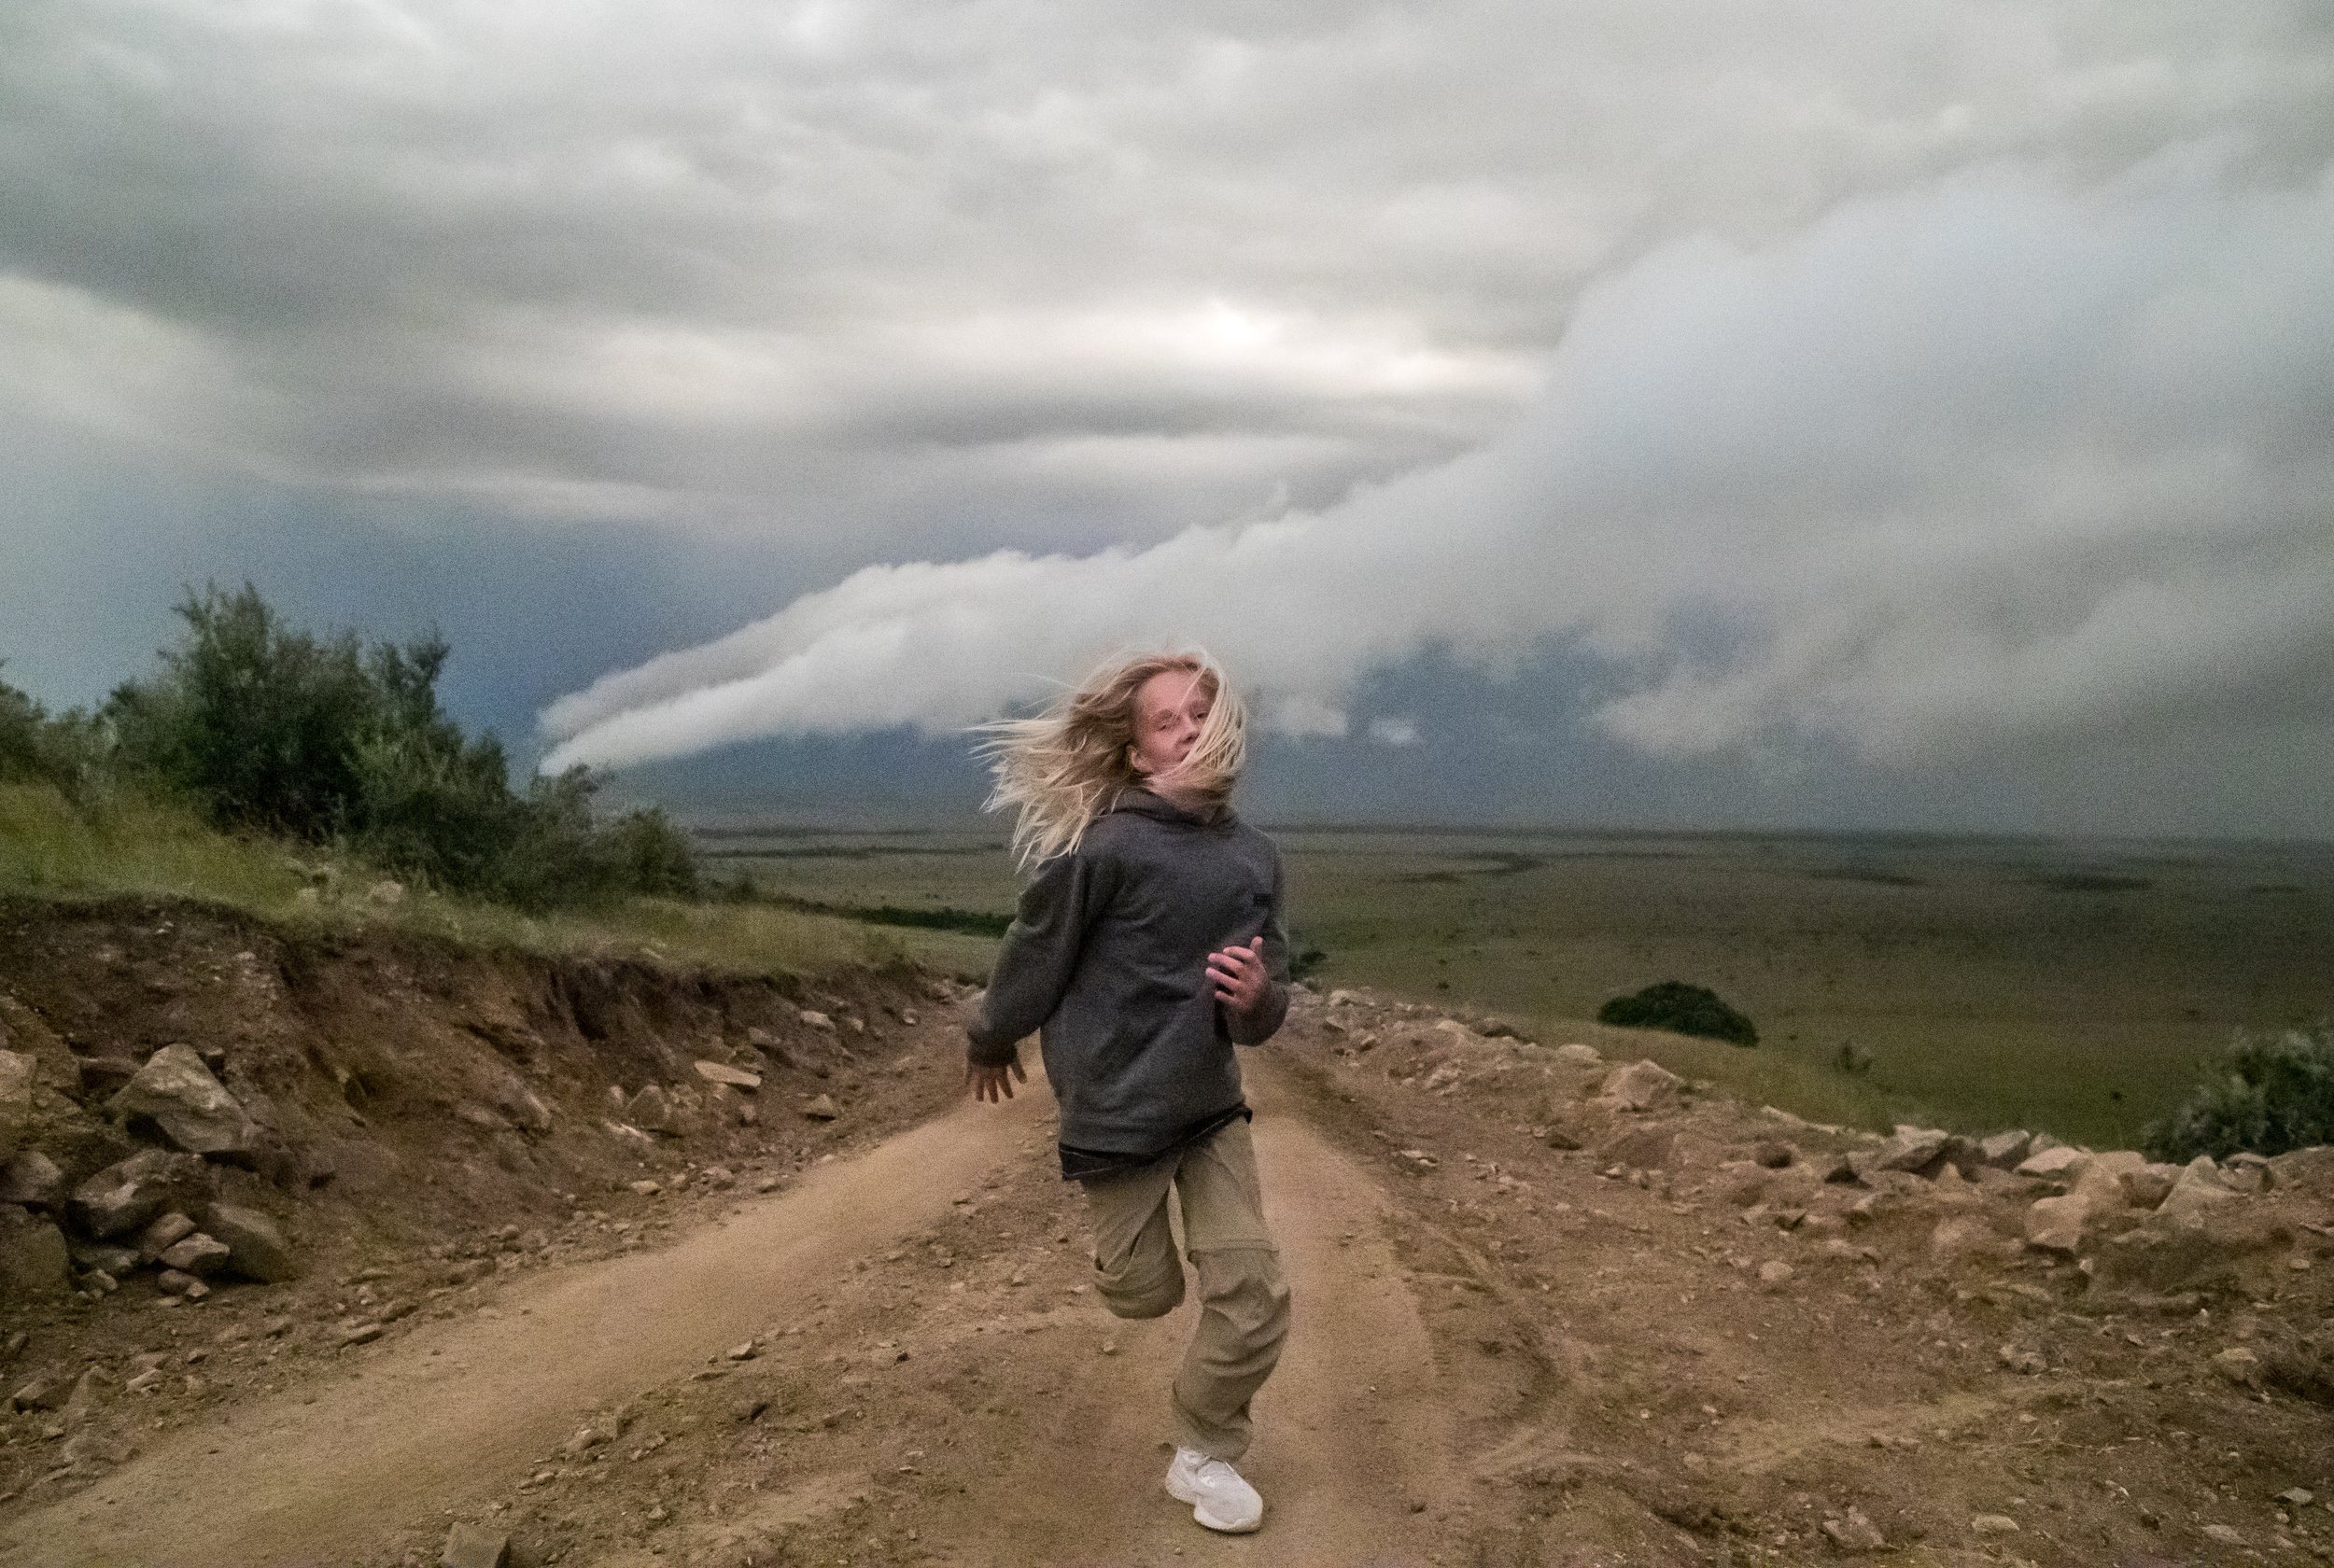   Masai Mara, Kenya, 2018 -  Running in a storm on return from safari.  